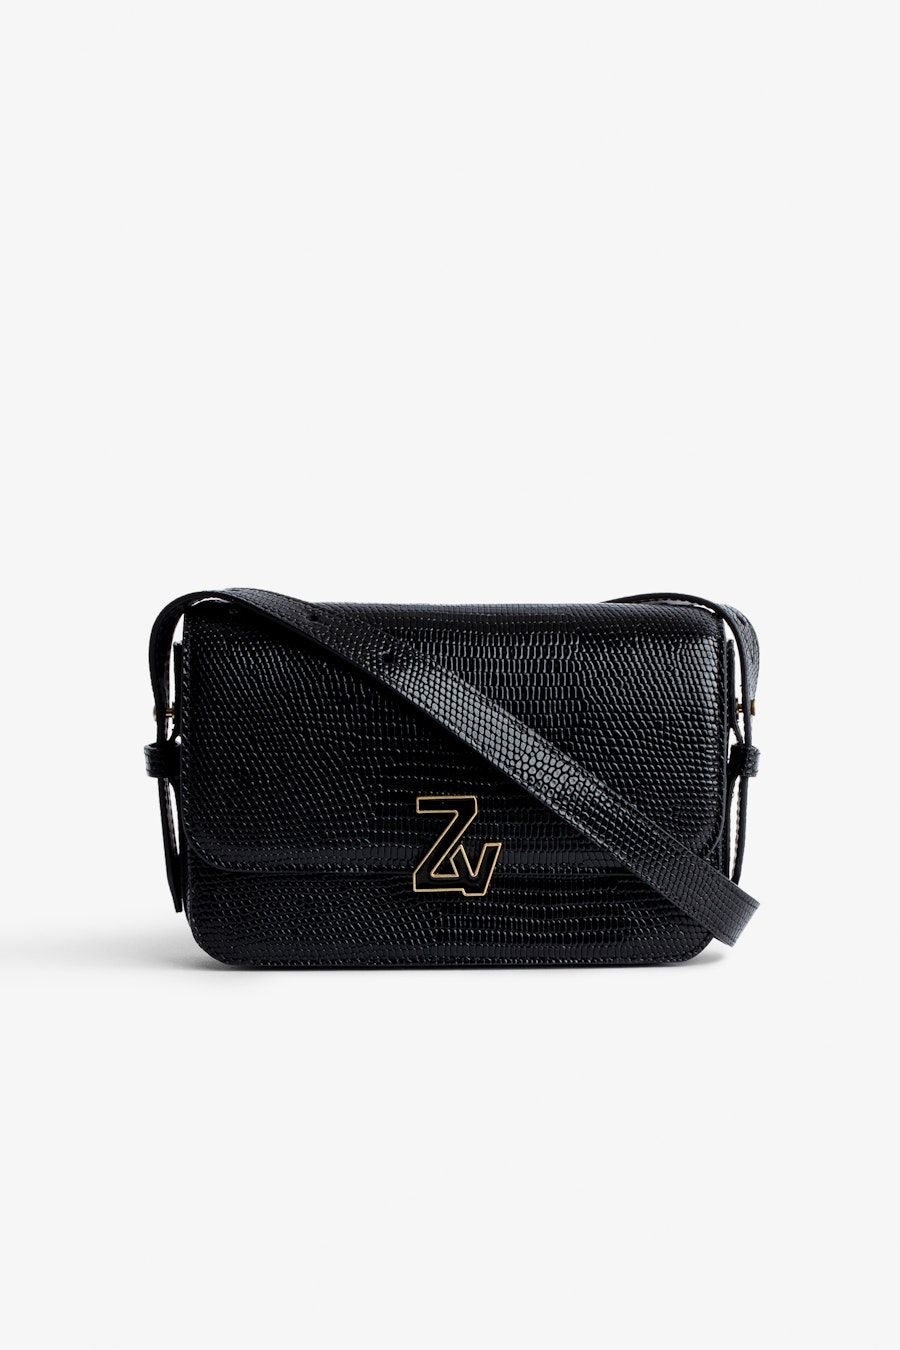 ZADIG&VOLTAIRE Le Mini ZV Initiale Bag,Black